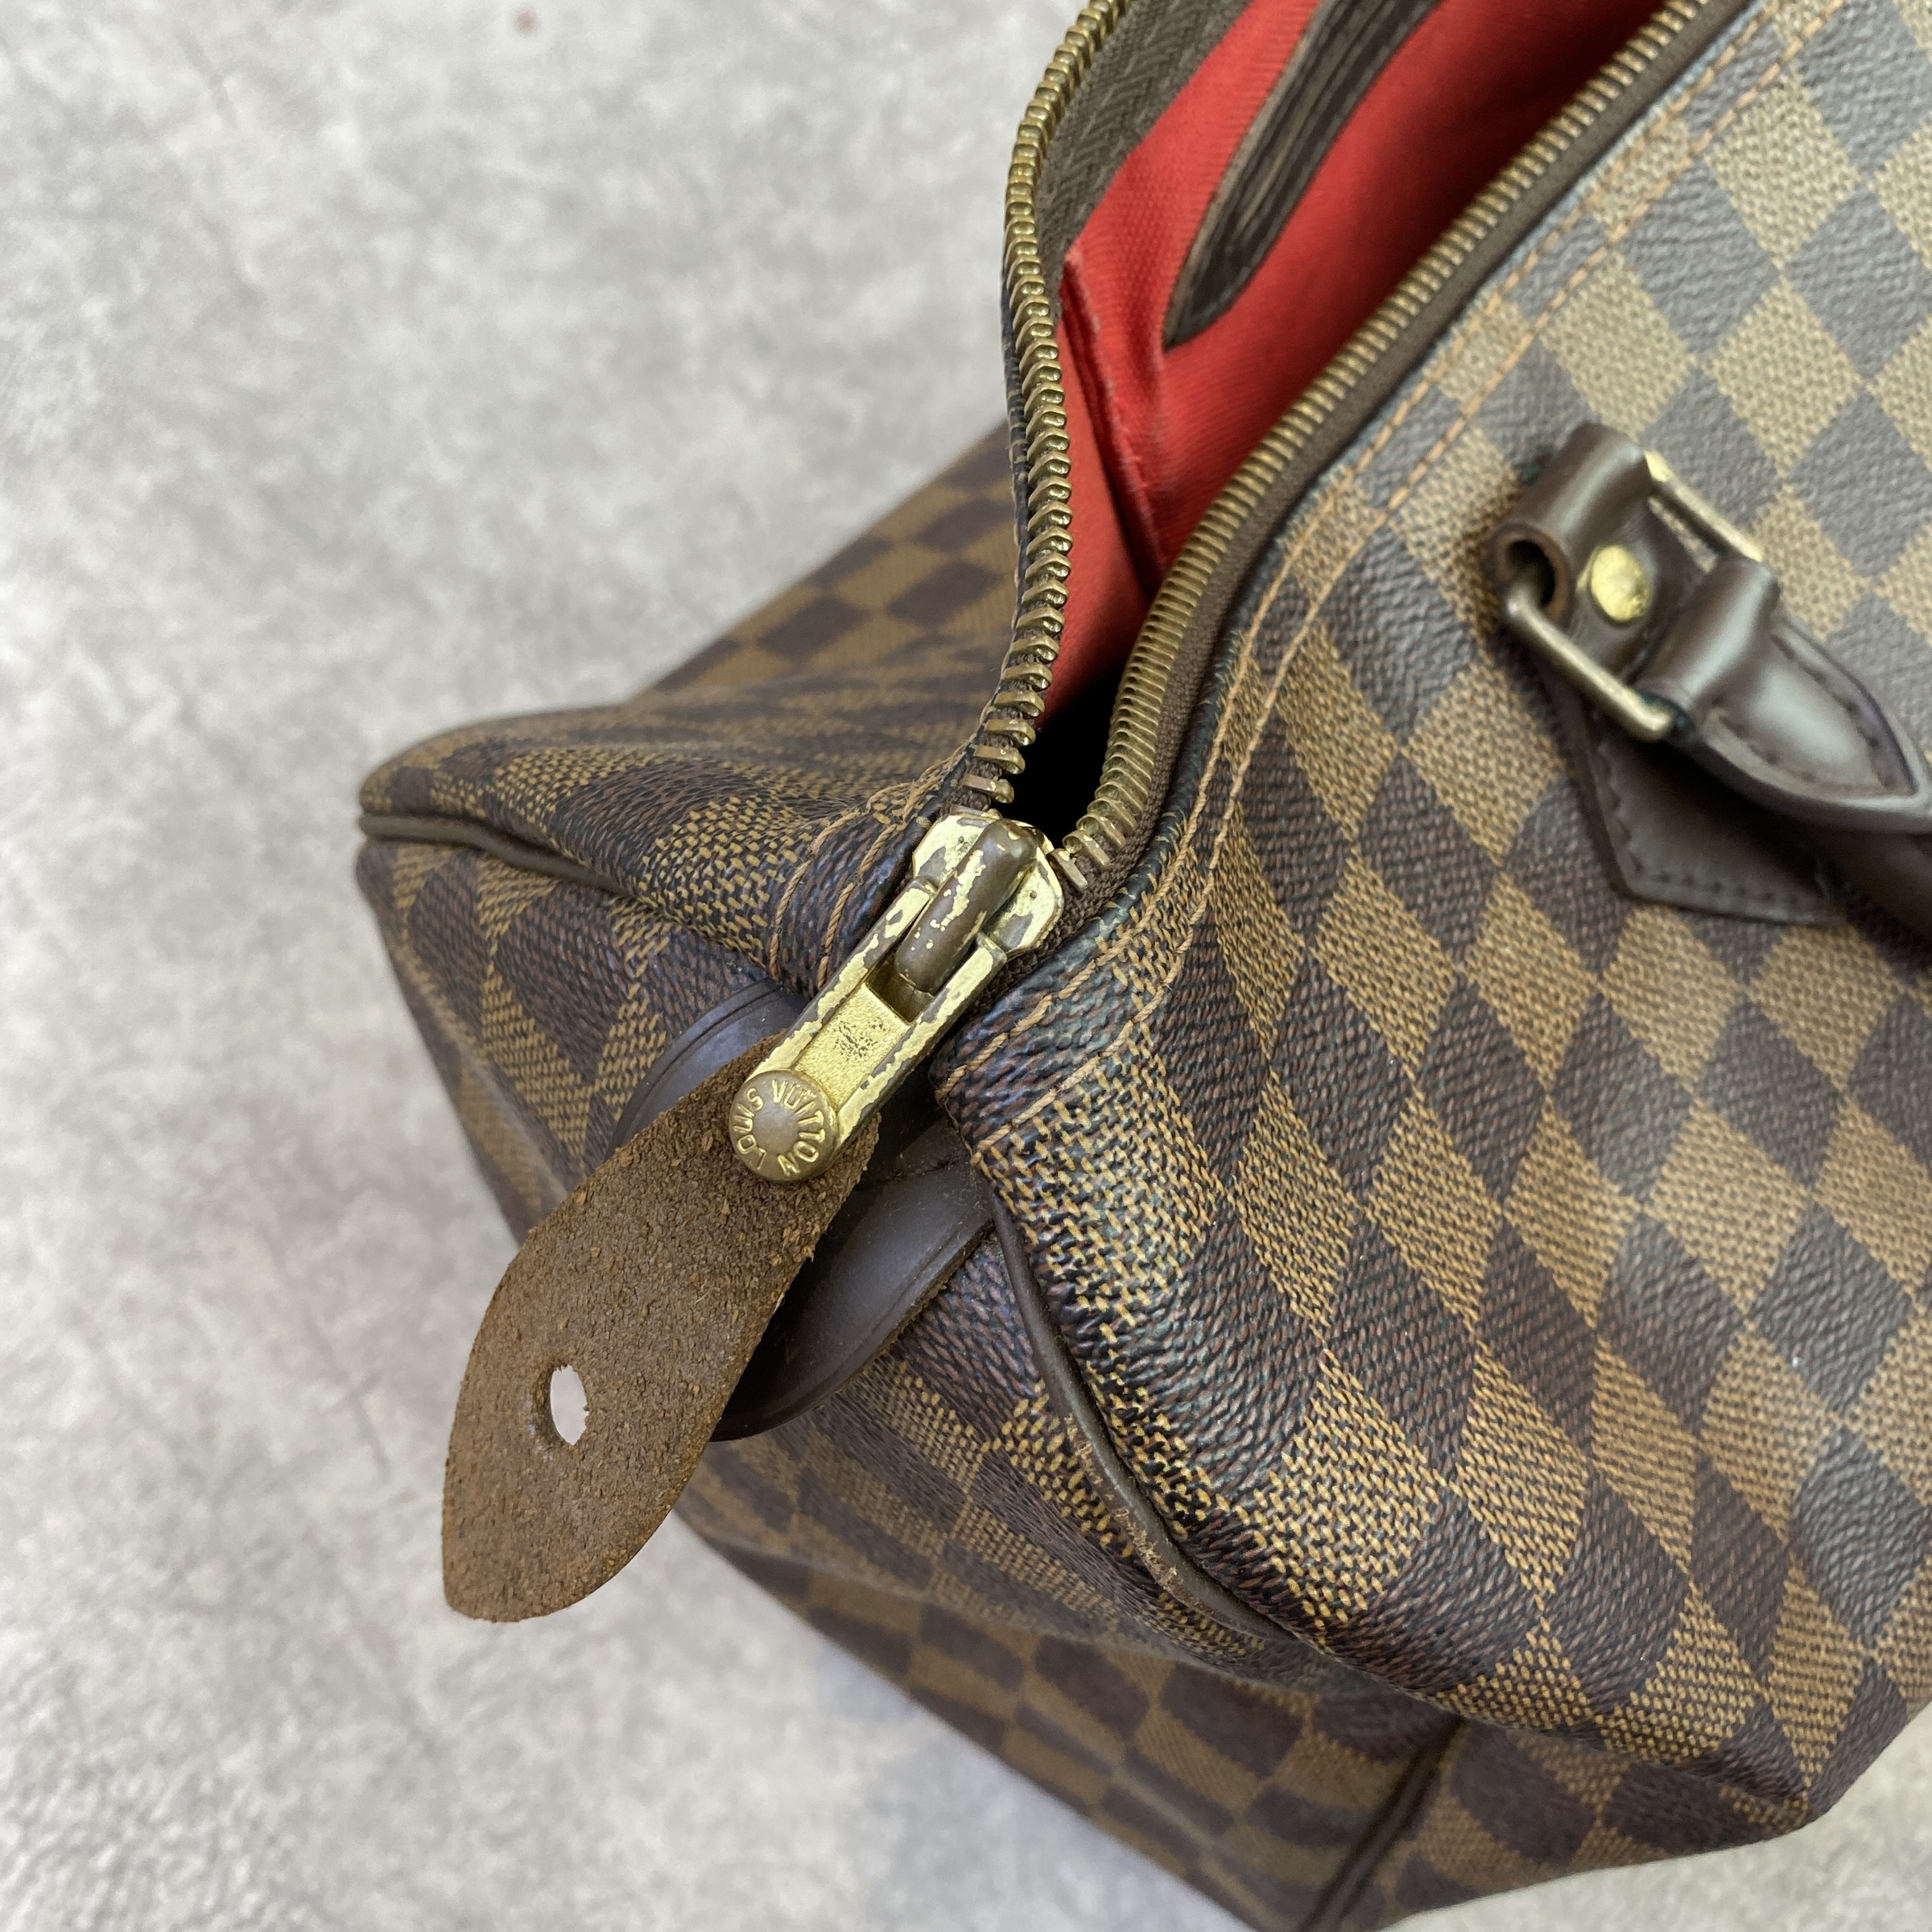 Louis Vuitton, Bags, Speedy 35 Damier Ebene